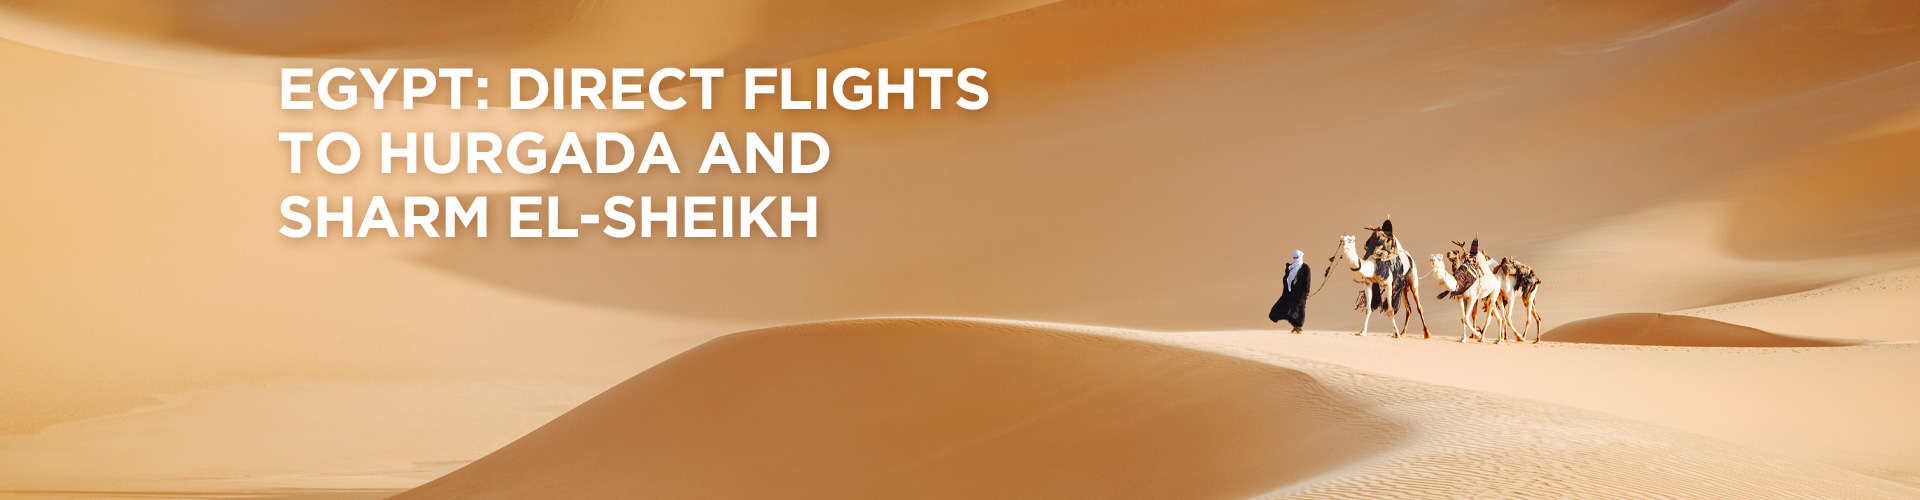 Azurair, Egypt direct flights to Hurghada and Sharm-el-Sheikh